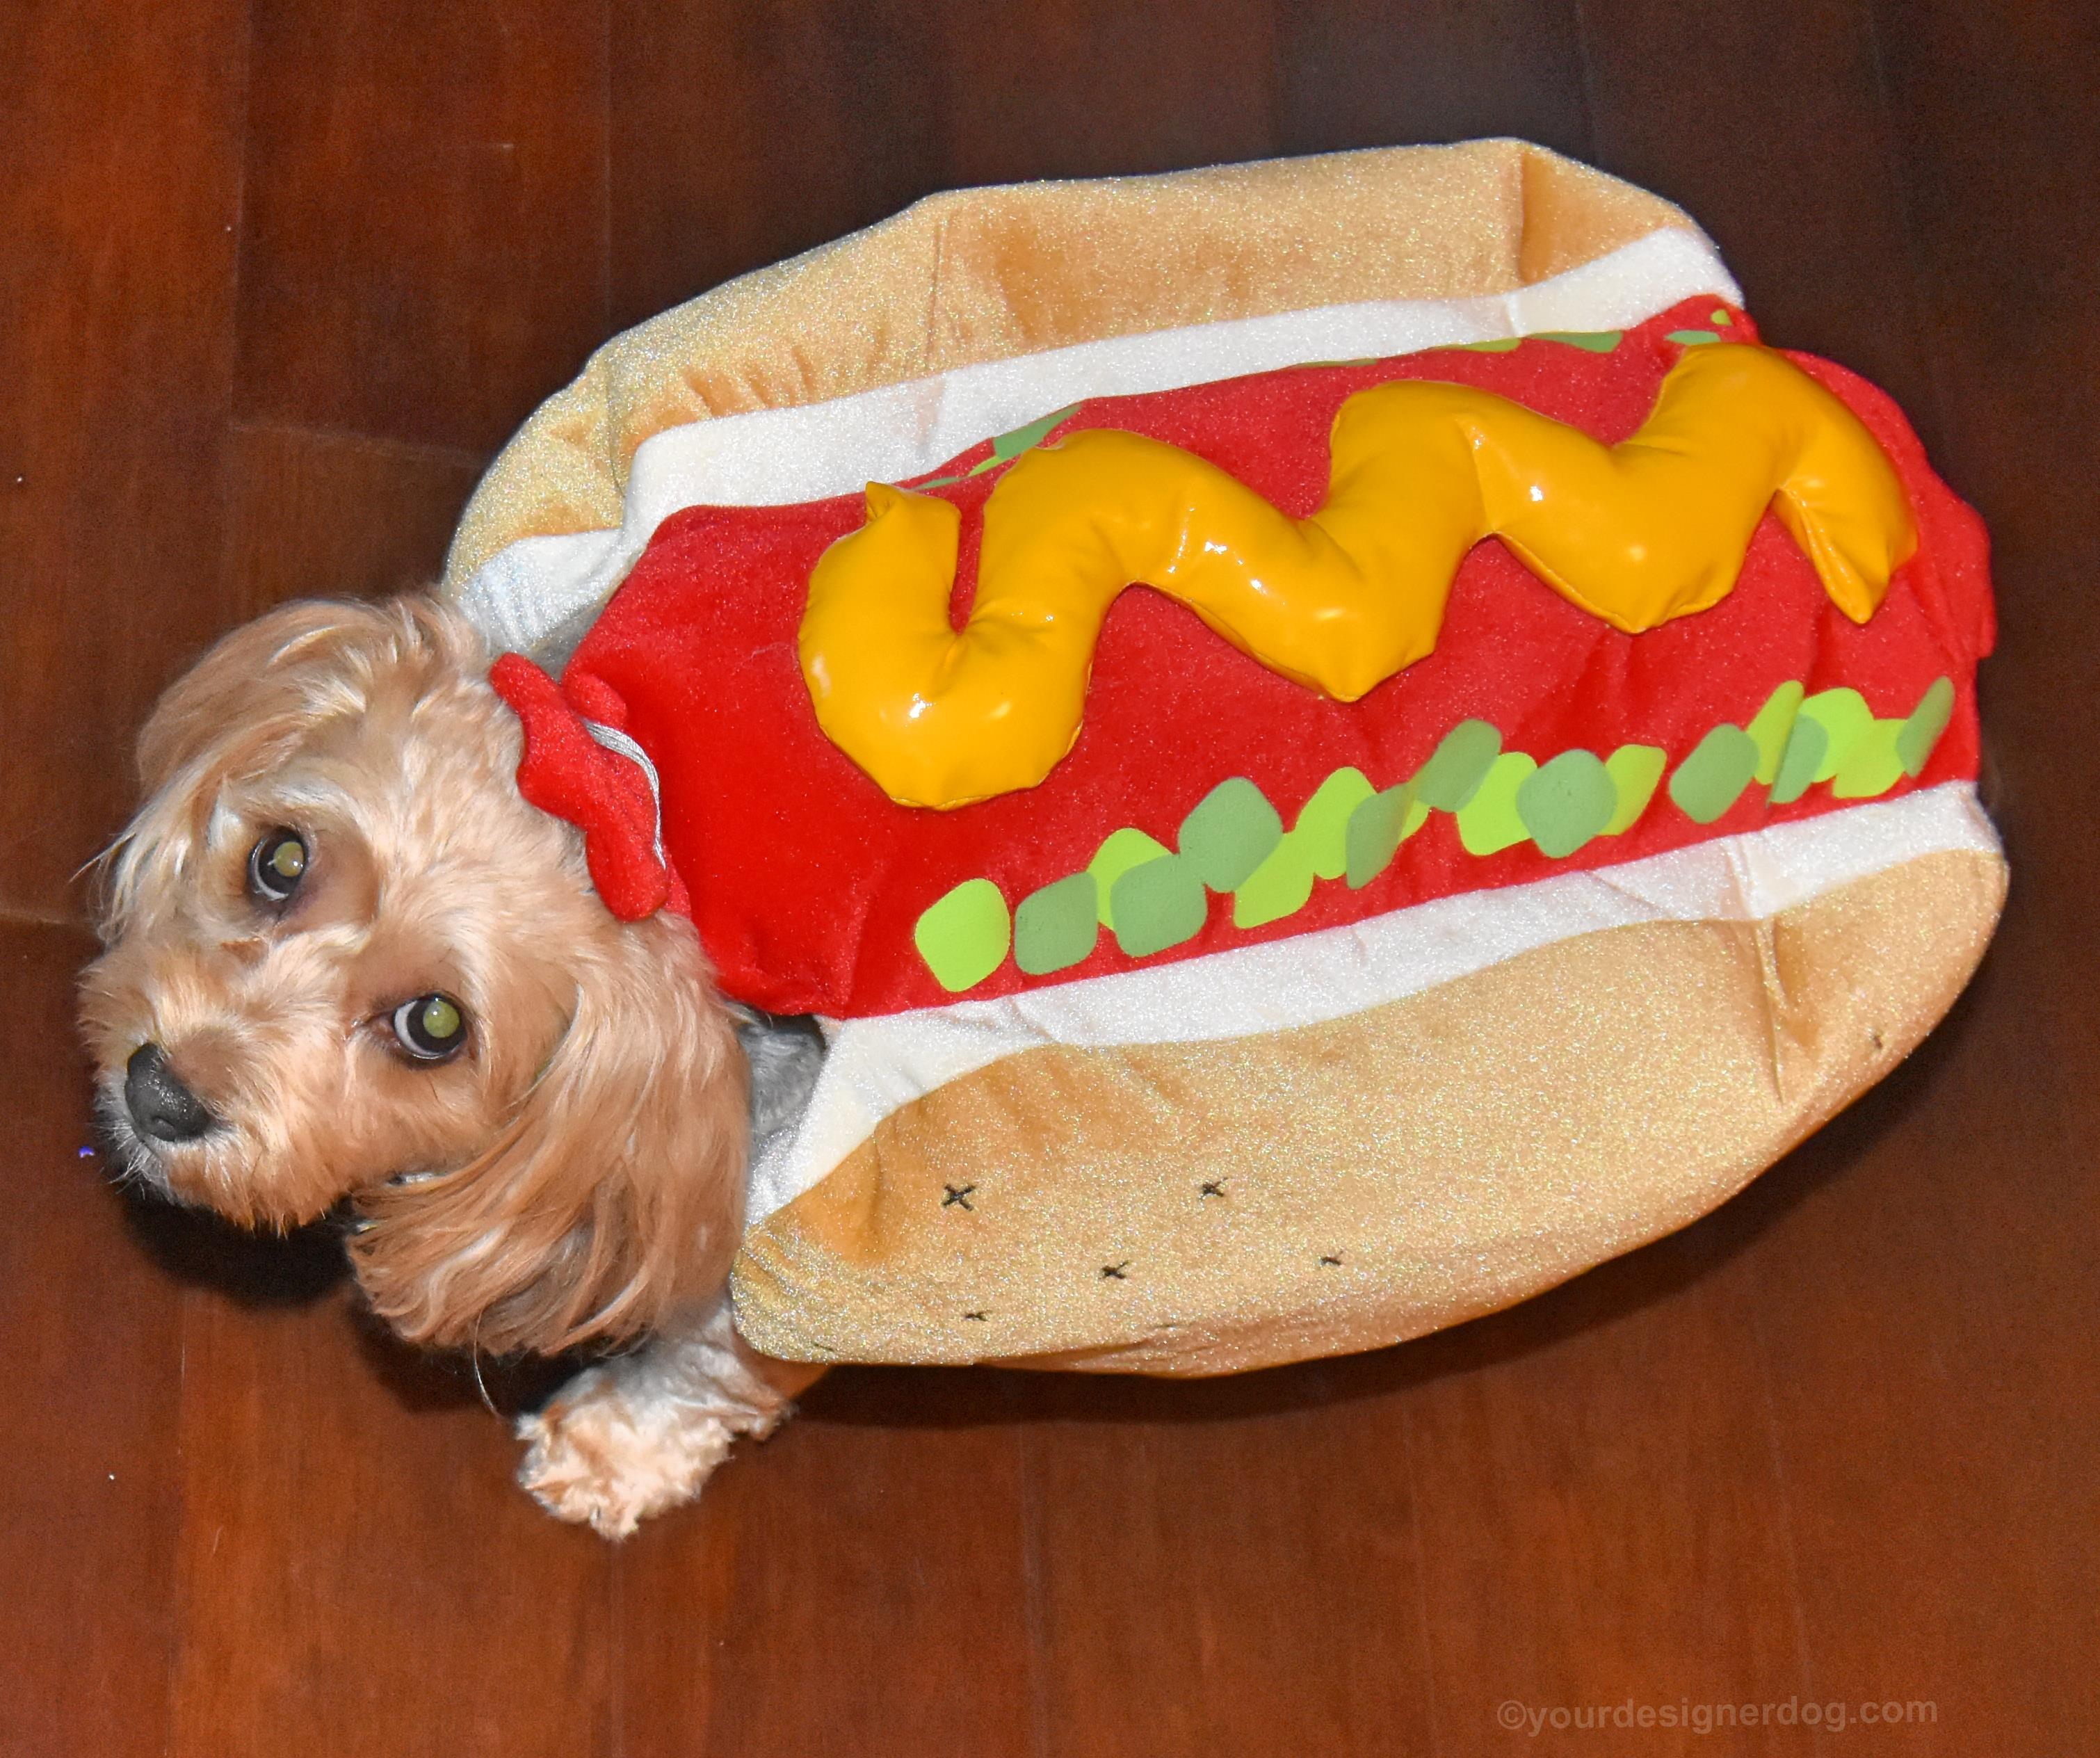 dogs, designer dogs, Yorkipoo, yorkie poo, hot dog costume, dog costume